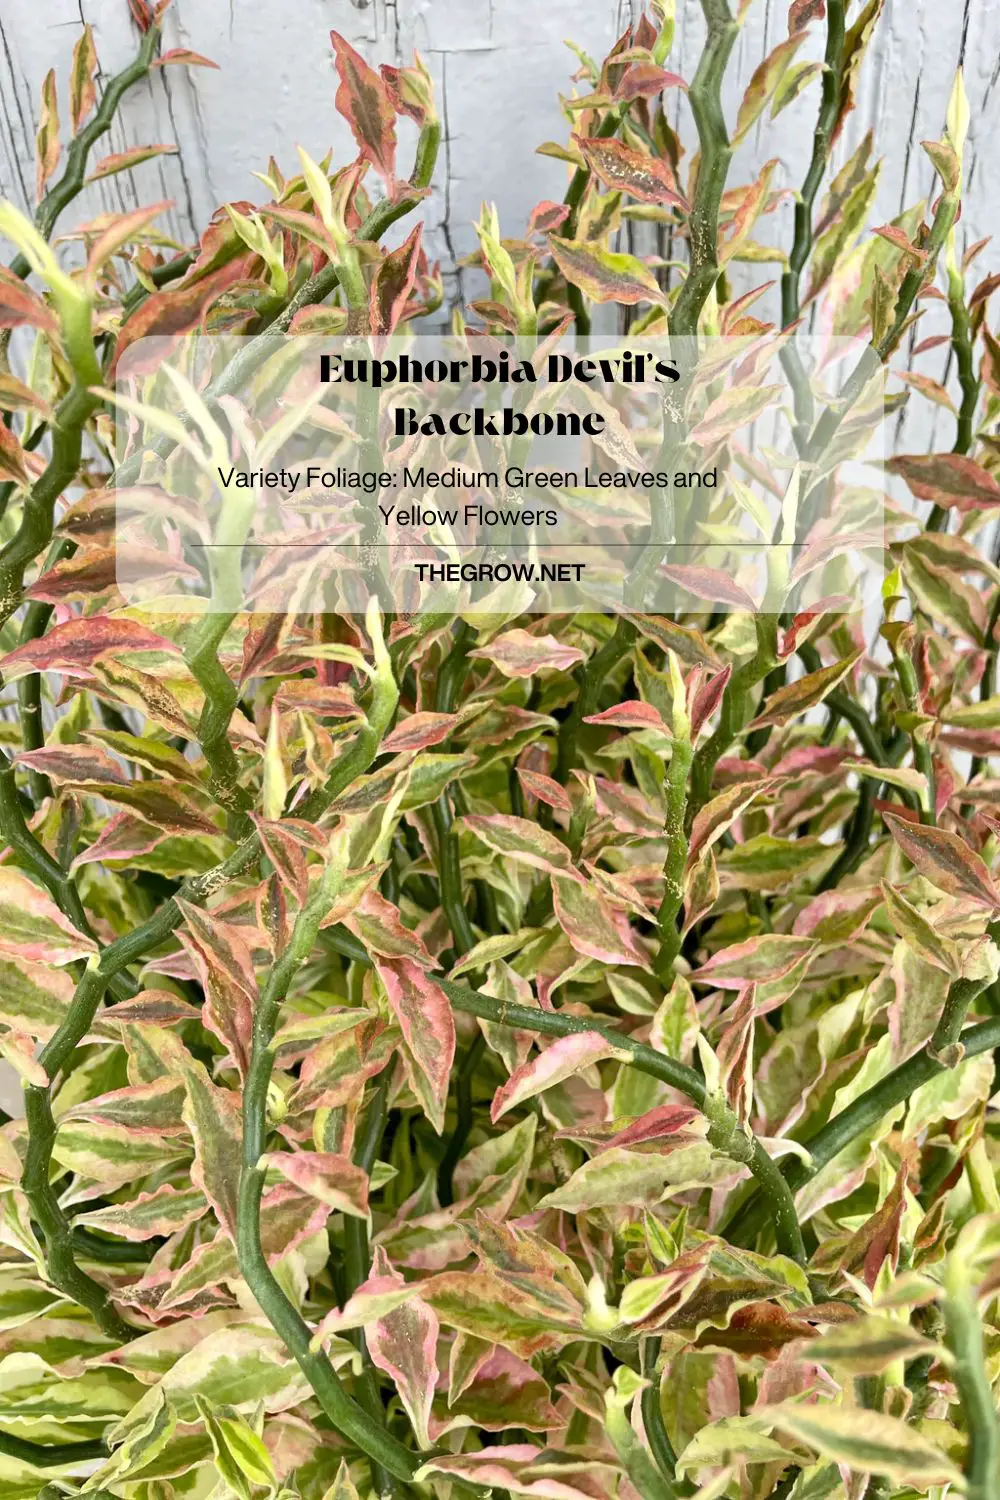 Euphorbia Devil’s Backbone thegrow.net